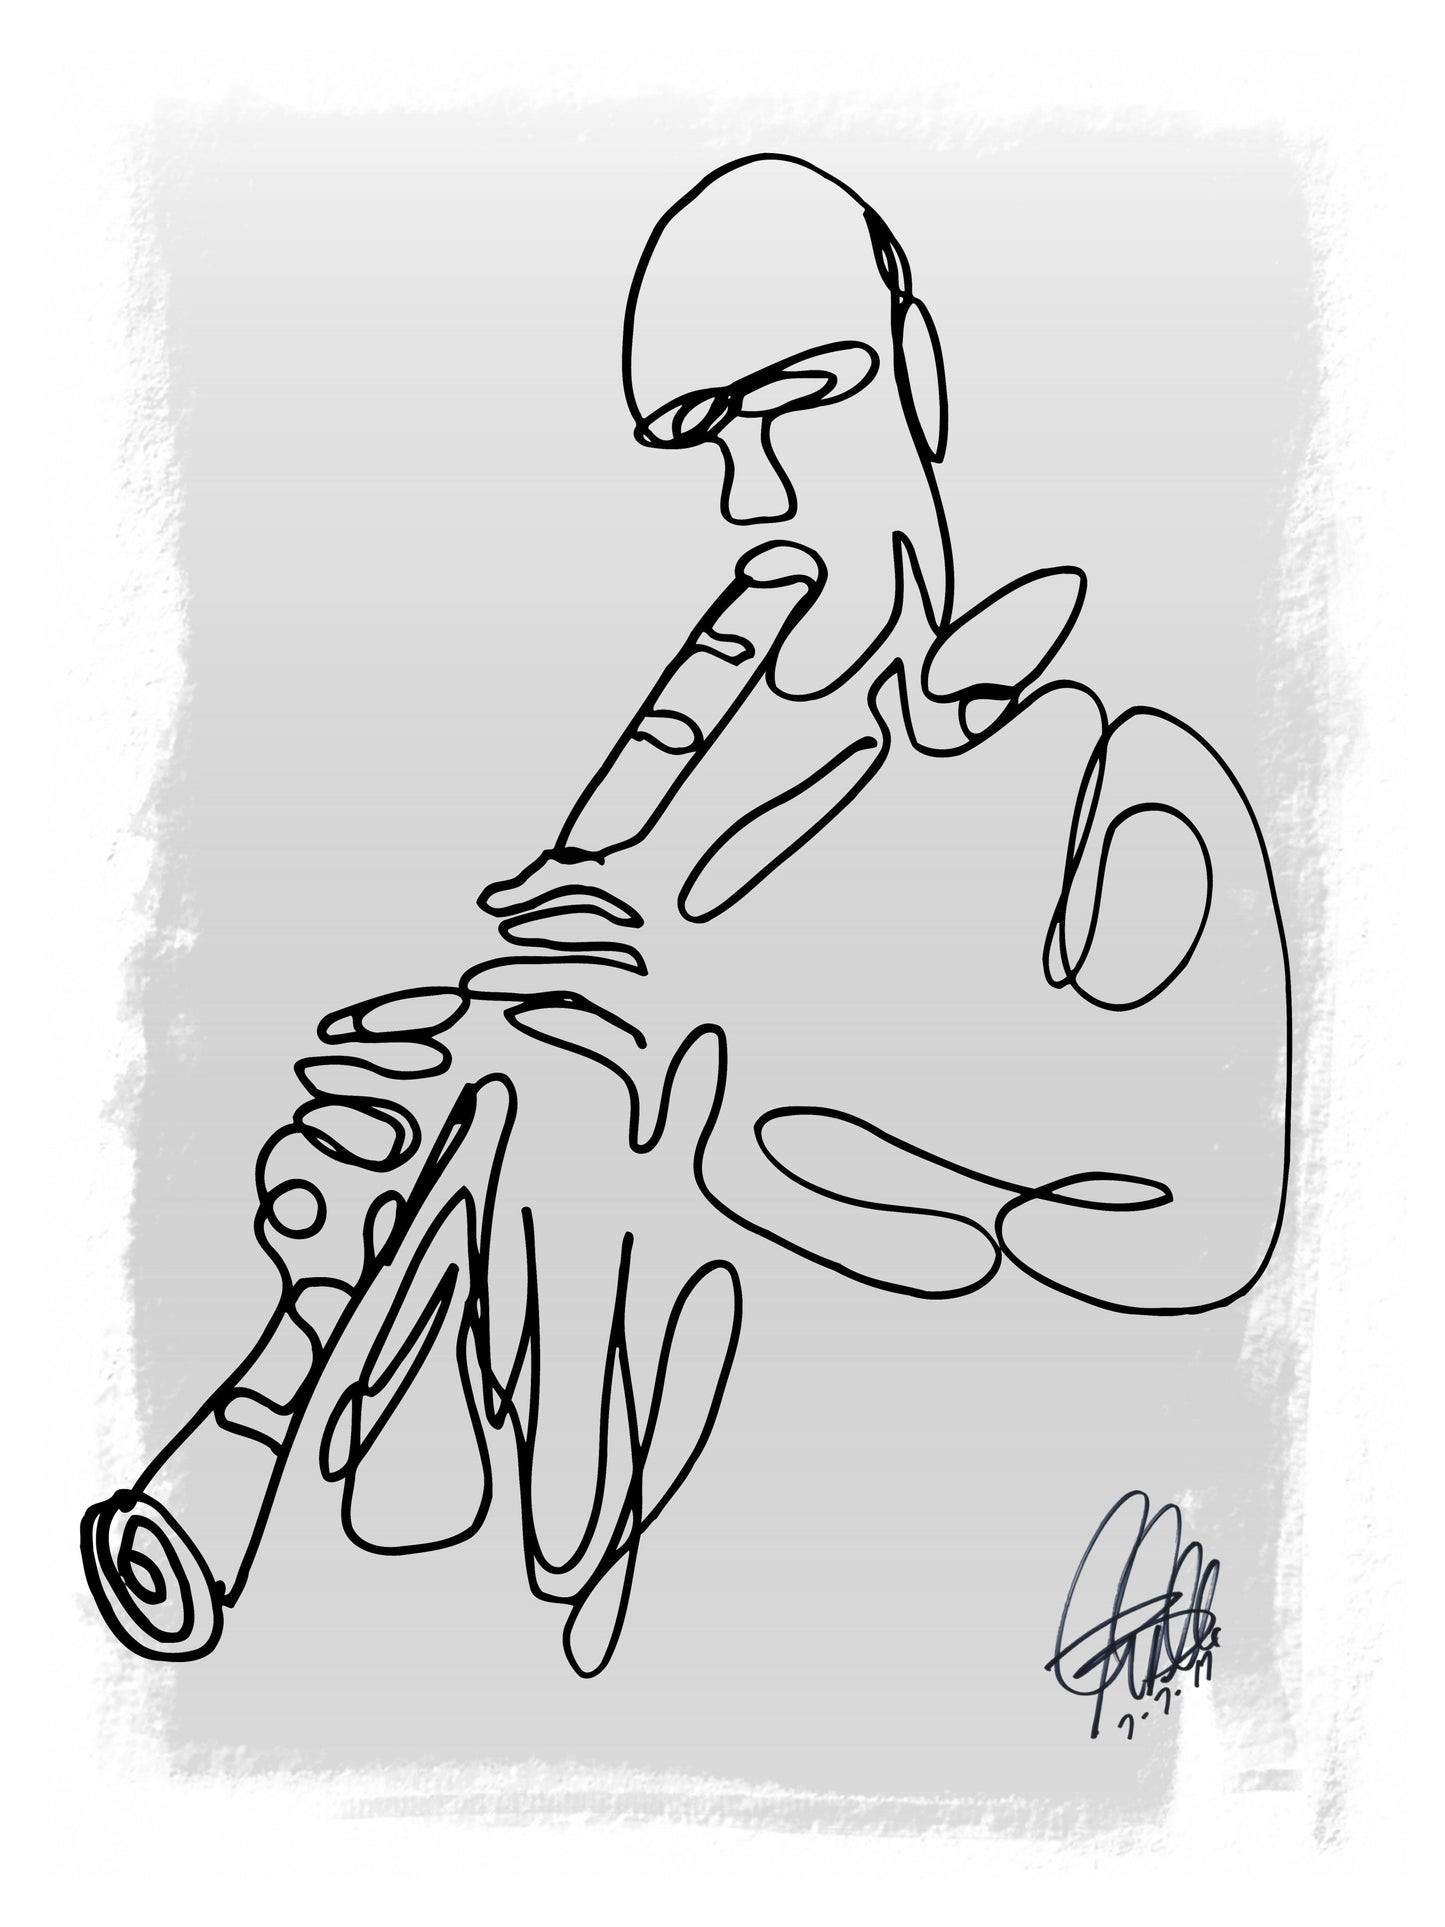 Clarinet Player Jazz Music Poster Print Wall Art 18x24